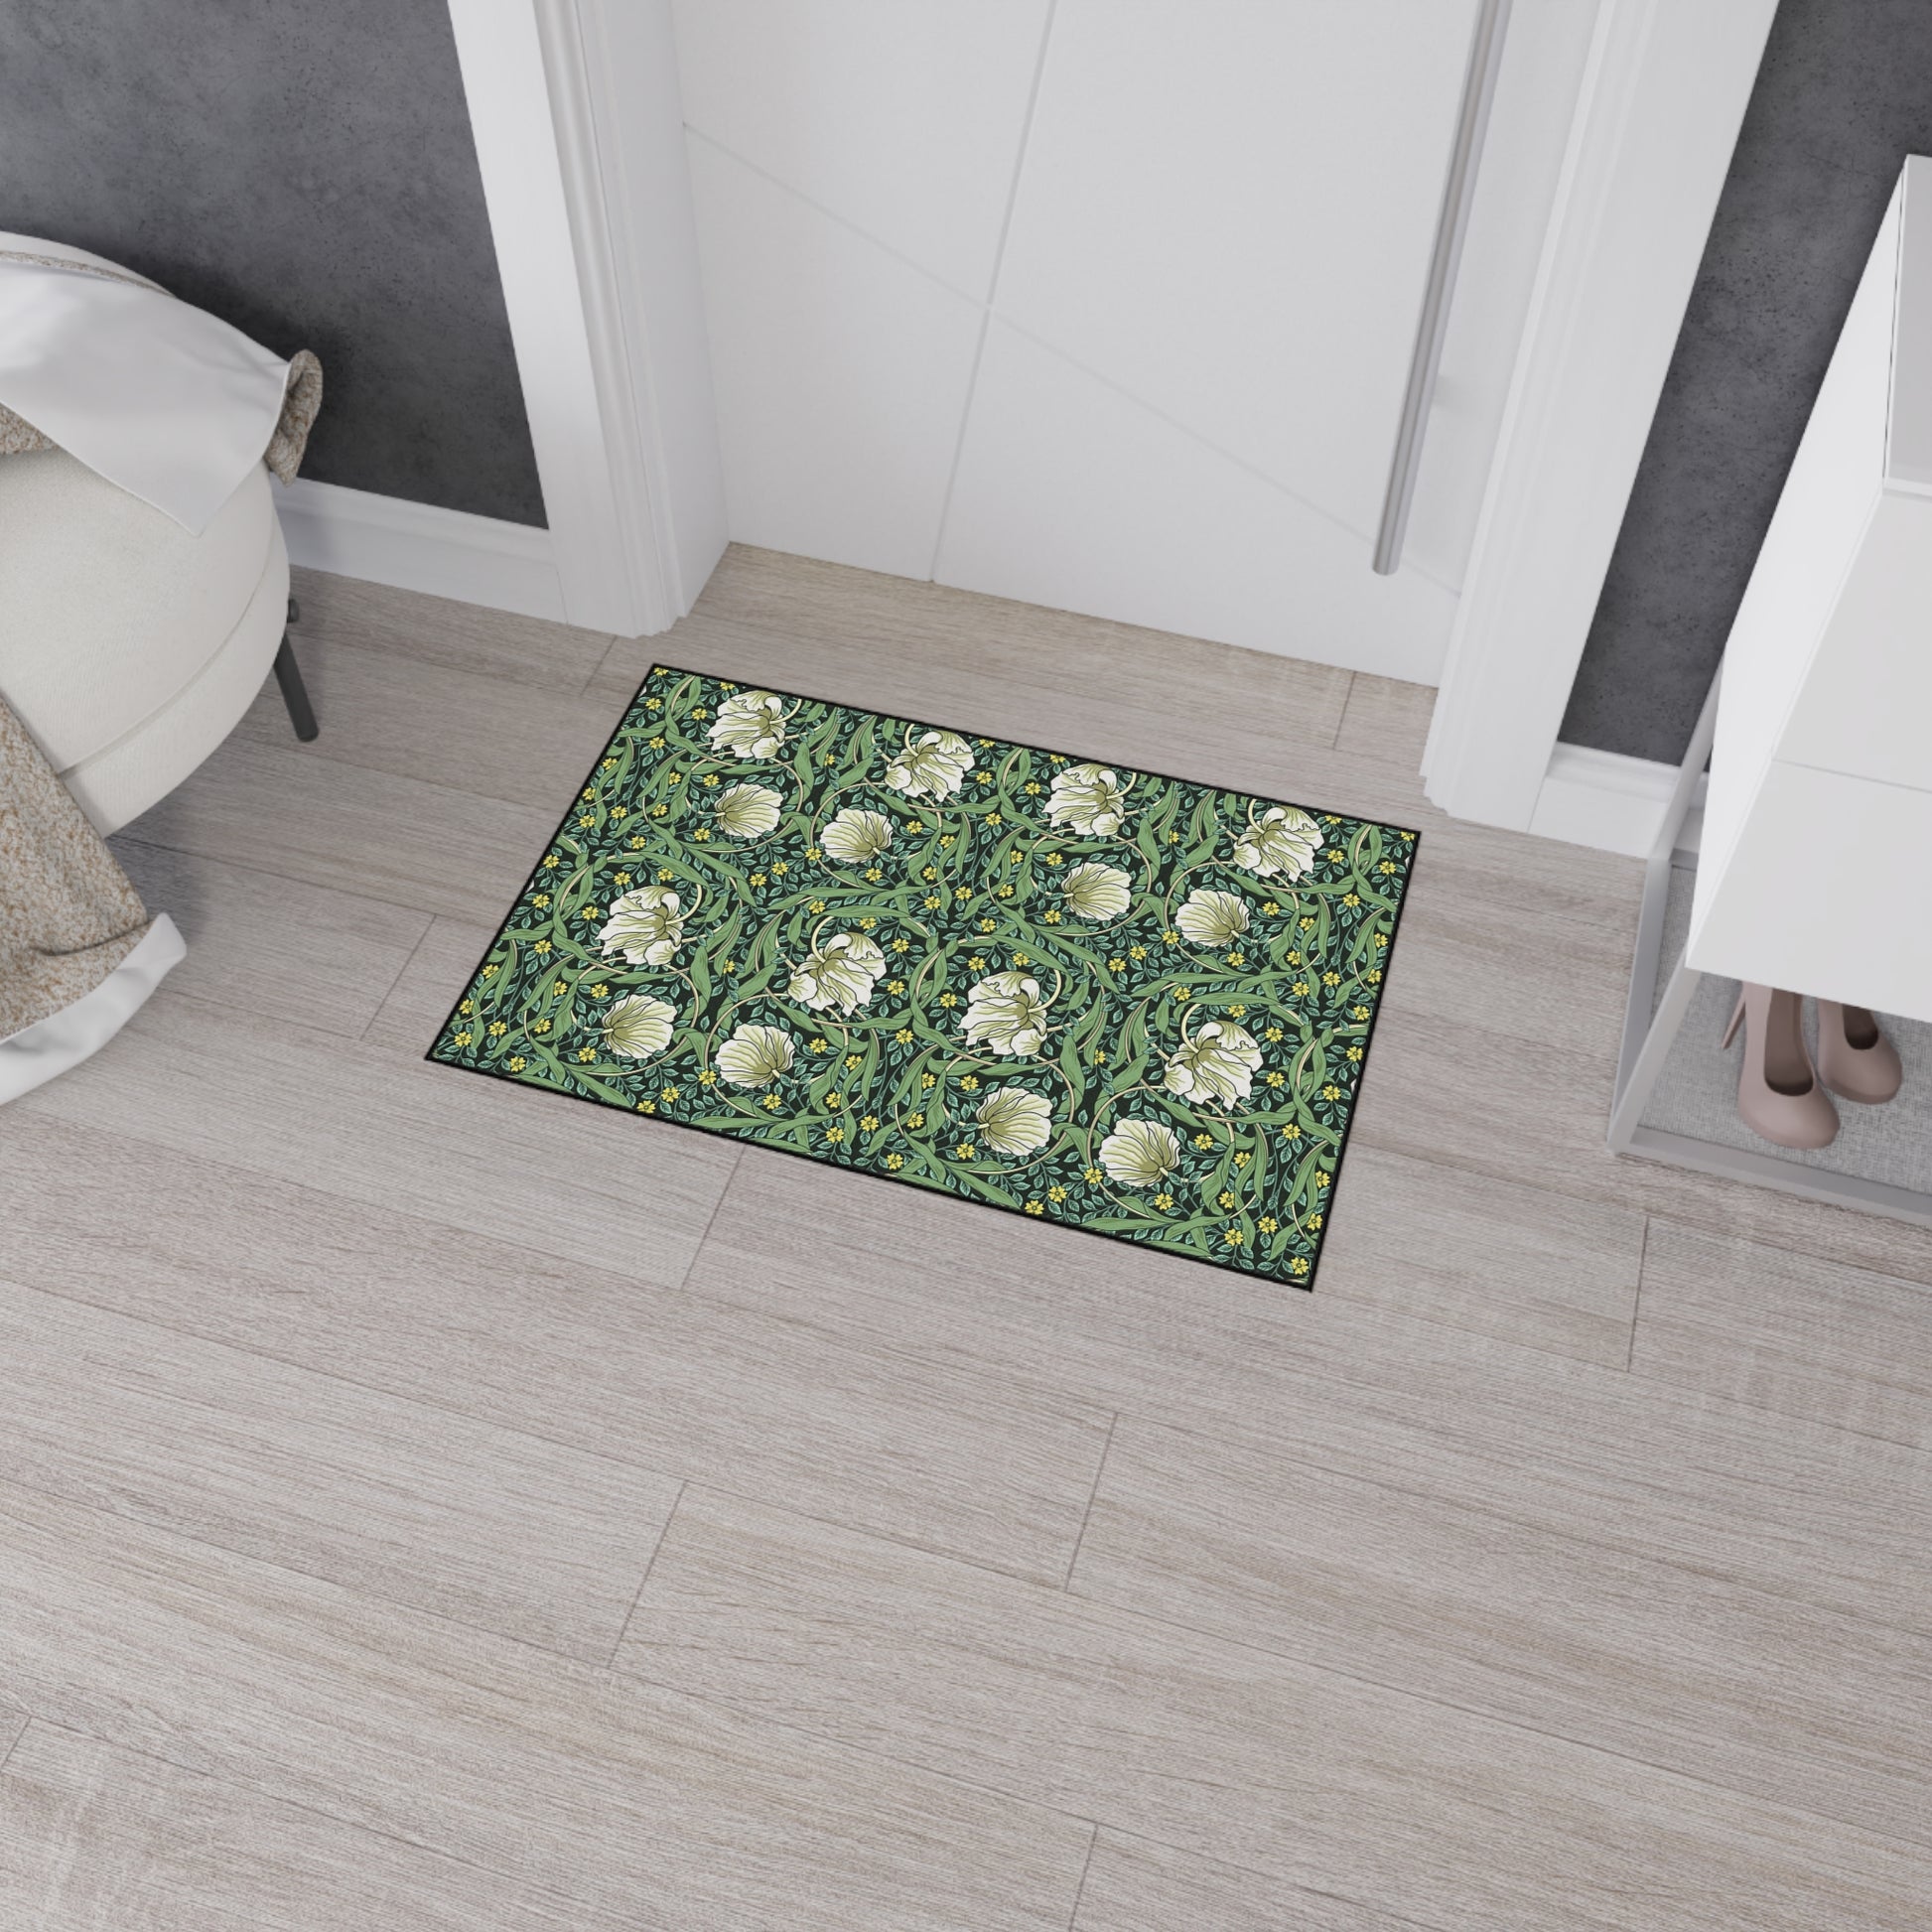 william-morris-co-heavy-duty-floor-mat-floor-mat-pimpernel-collection-green-13